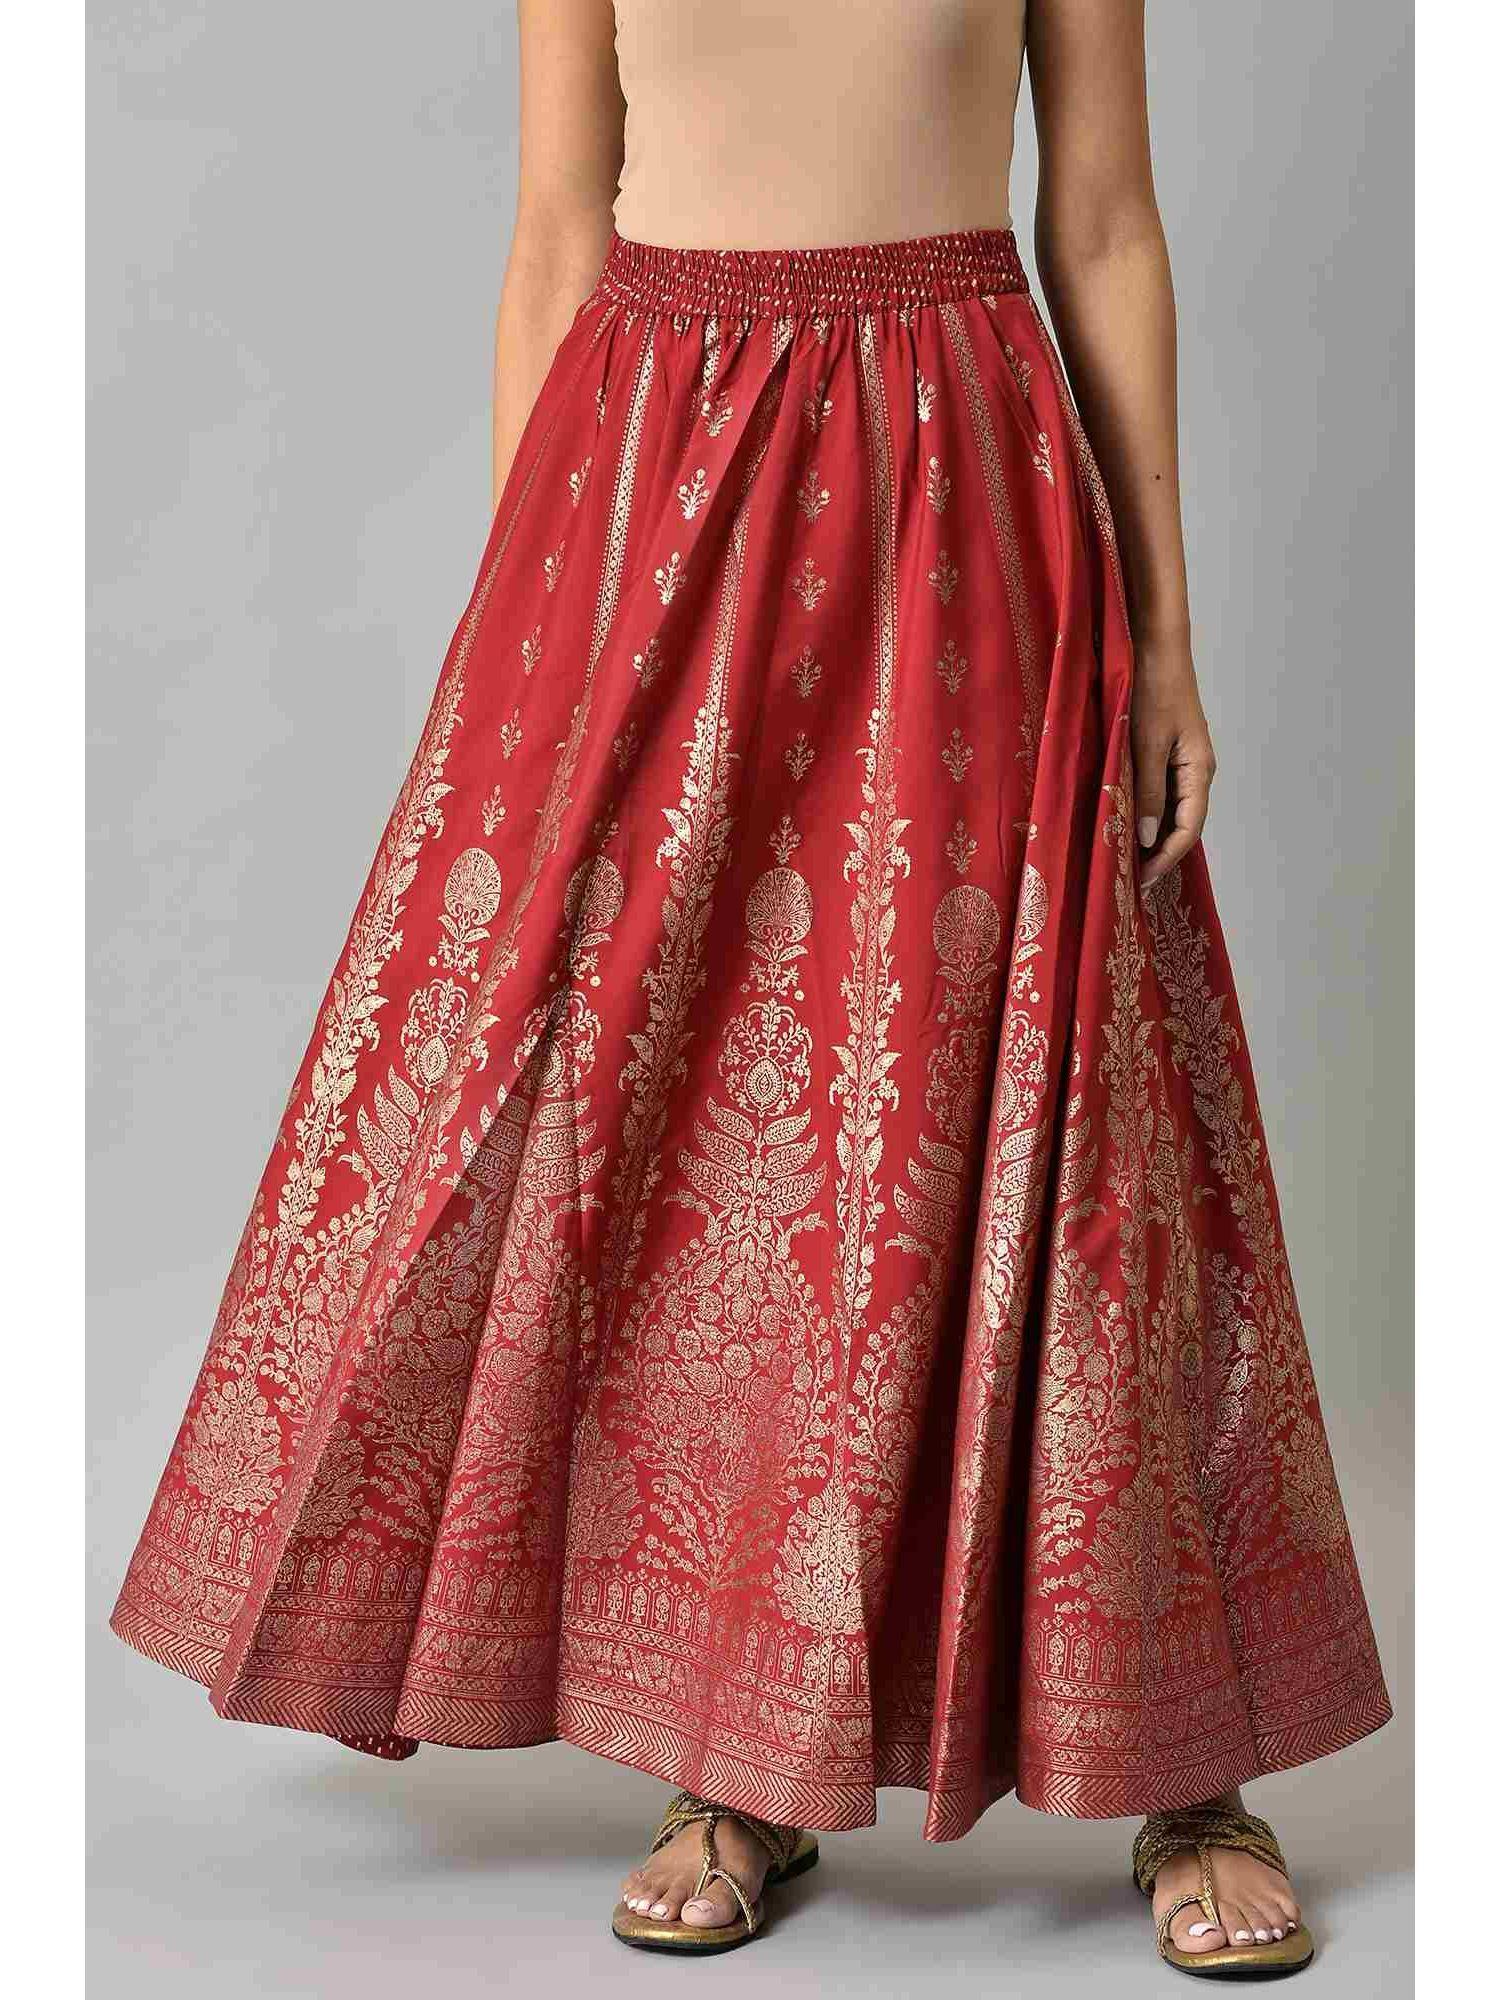 maroon half circle ethnic skirt